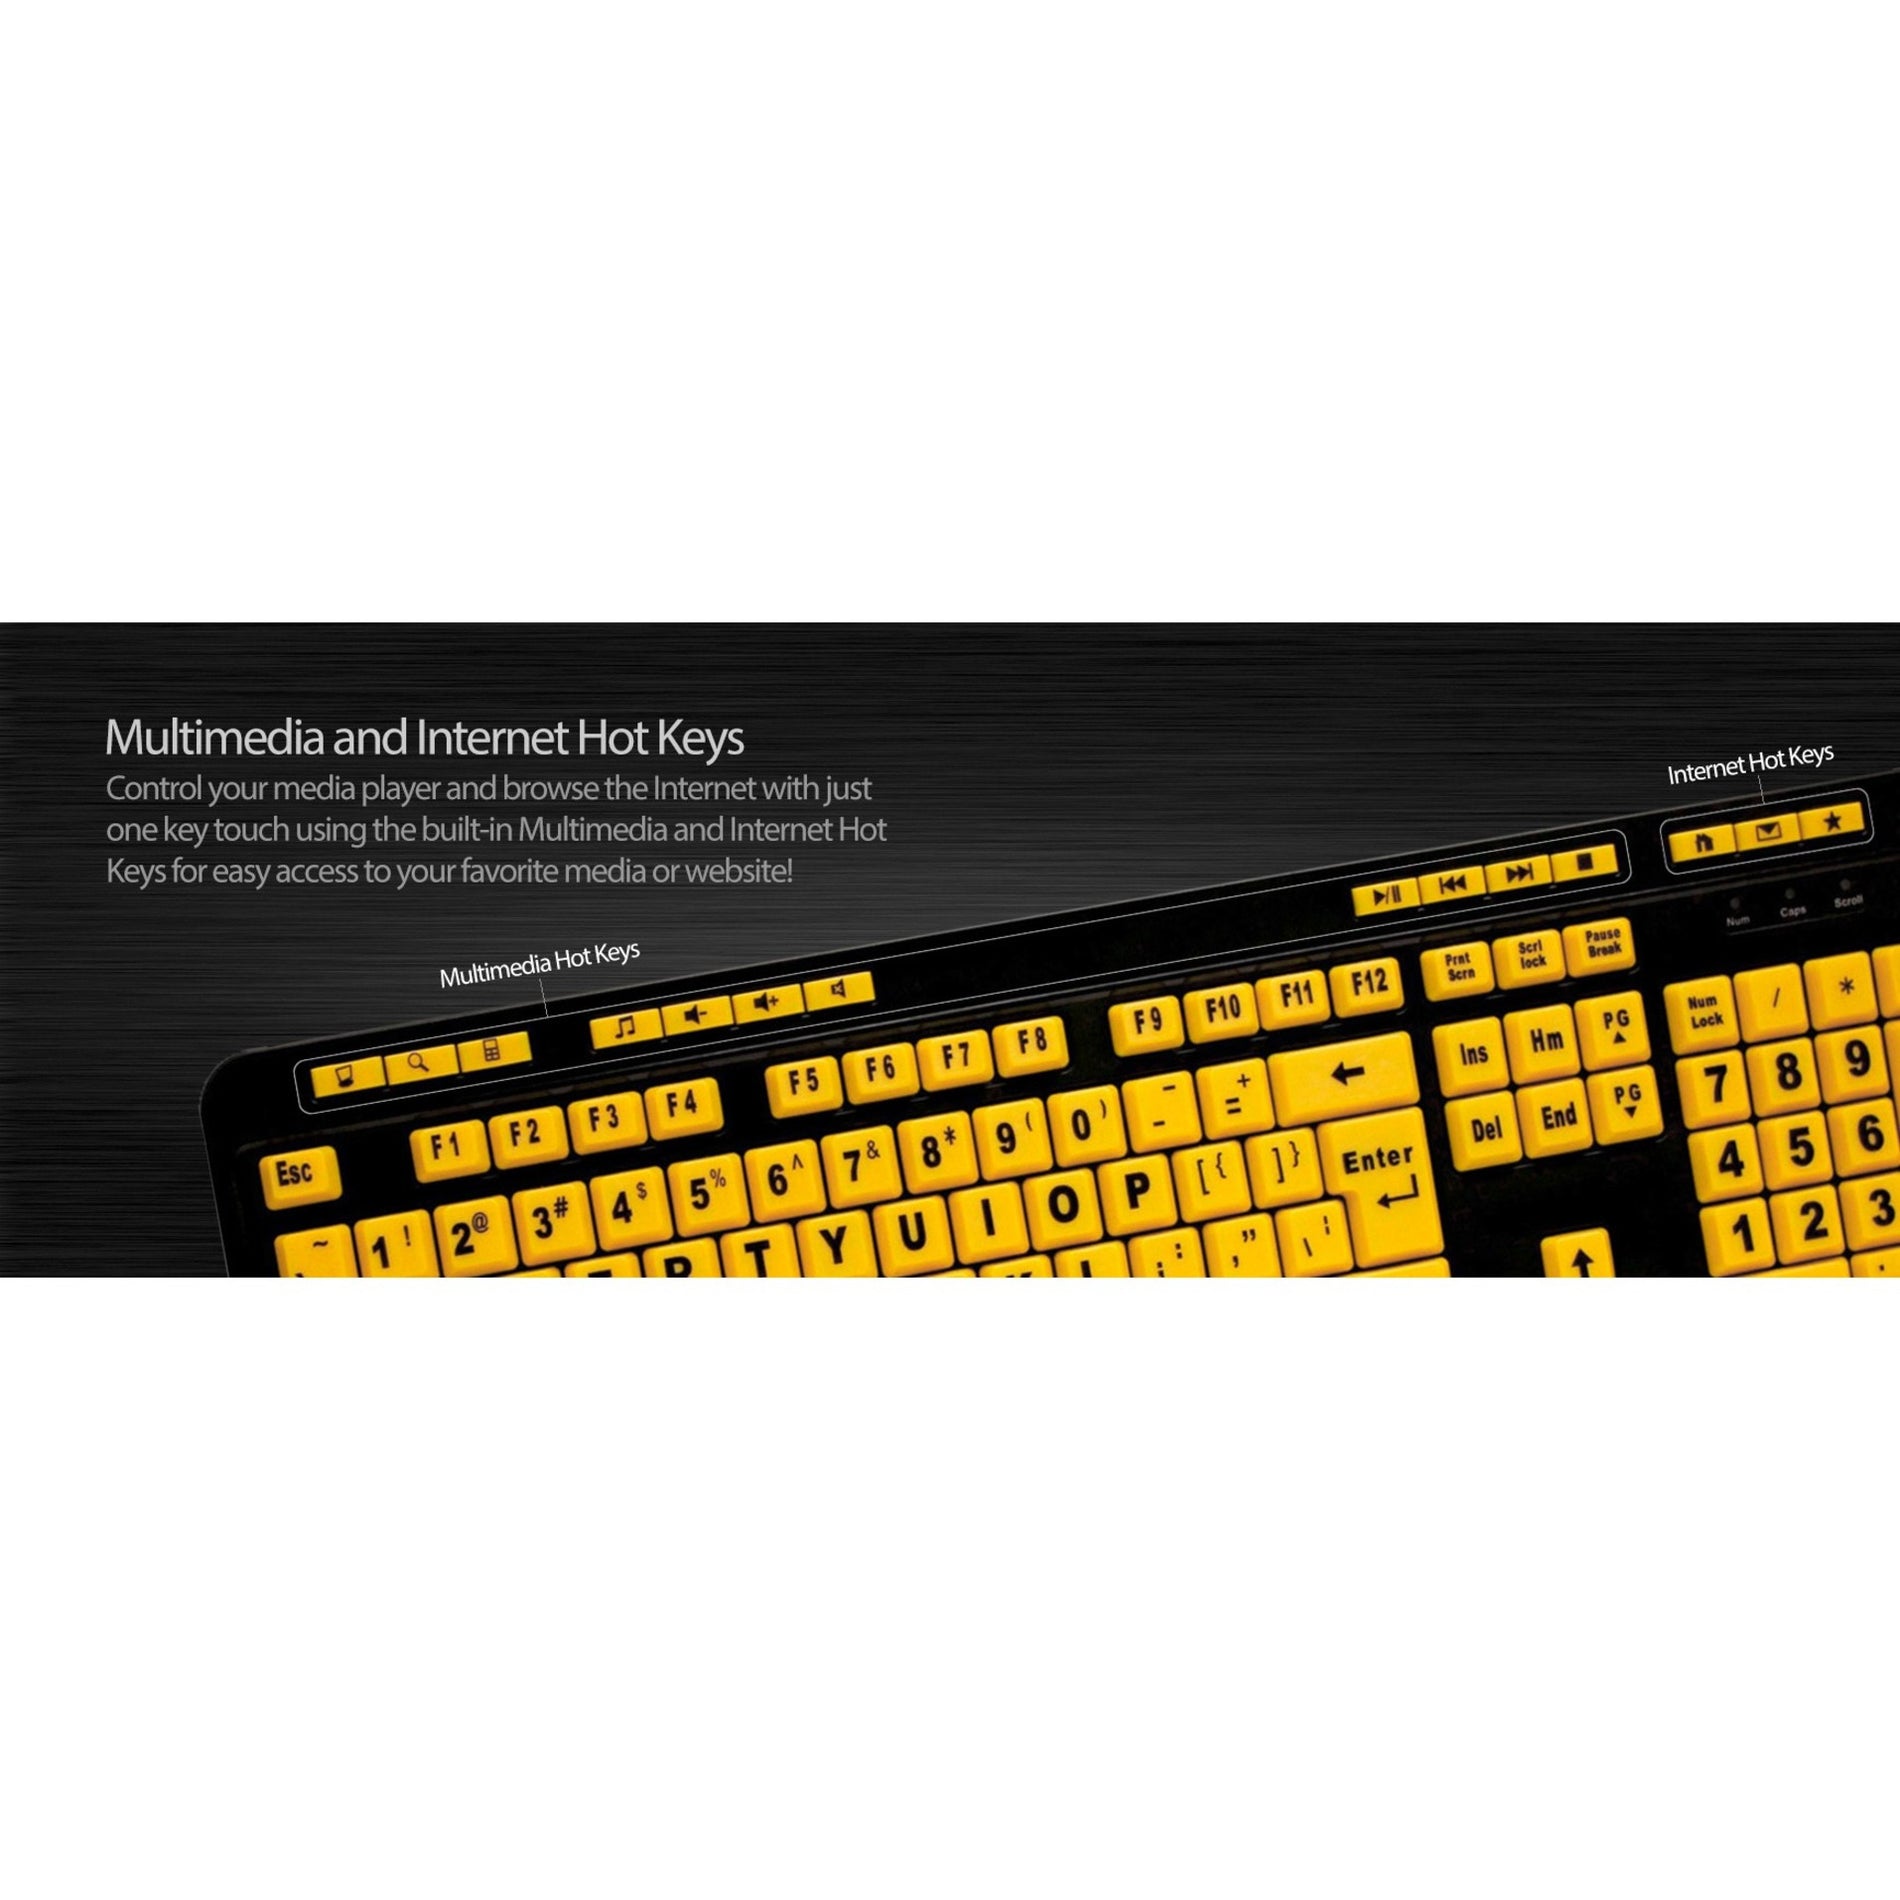 Adesso AKB-132UY Luminous 4X Large Print Multimedia Desktop Keyboard, Ergonomic, Fluorescent Yellow